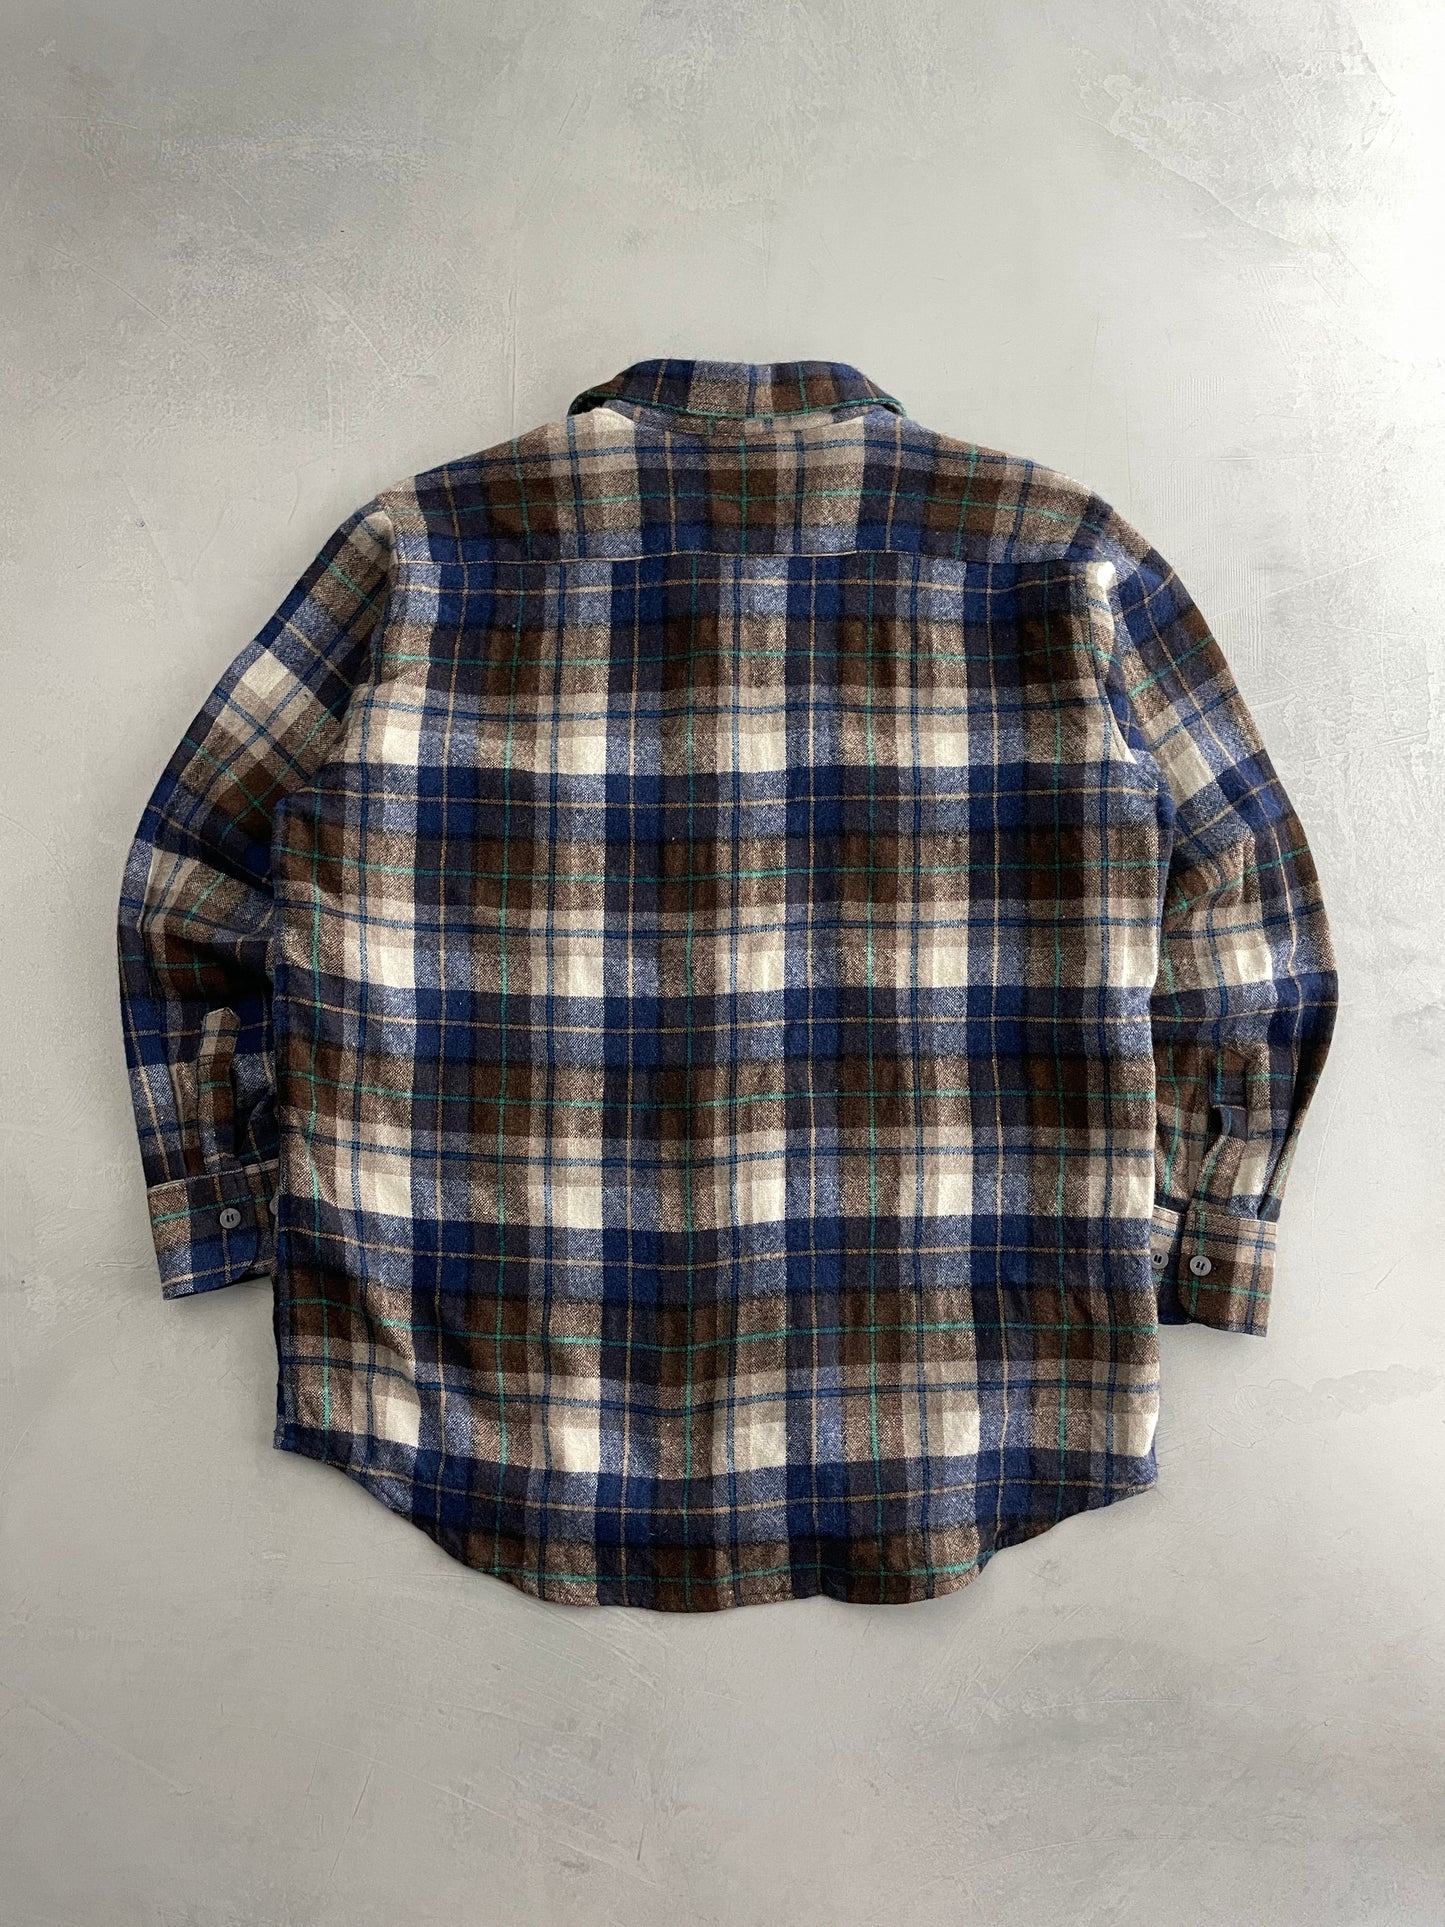 Elkmont Wool Overshirt [XL]